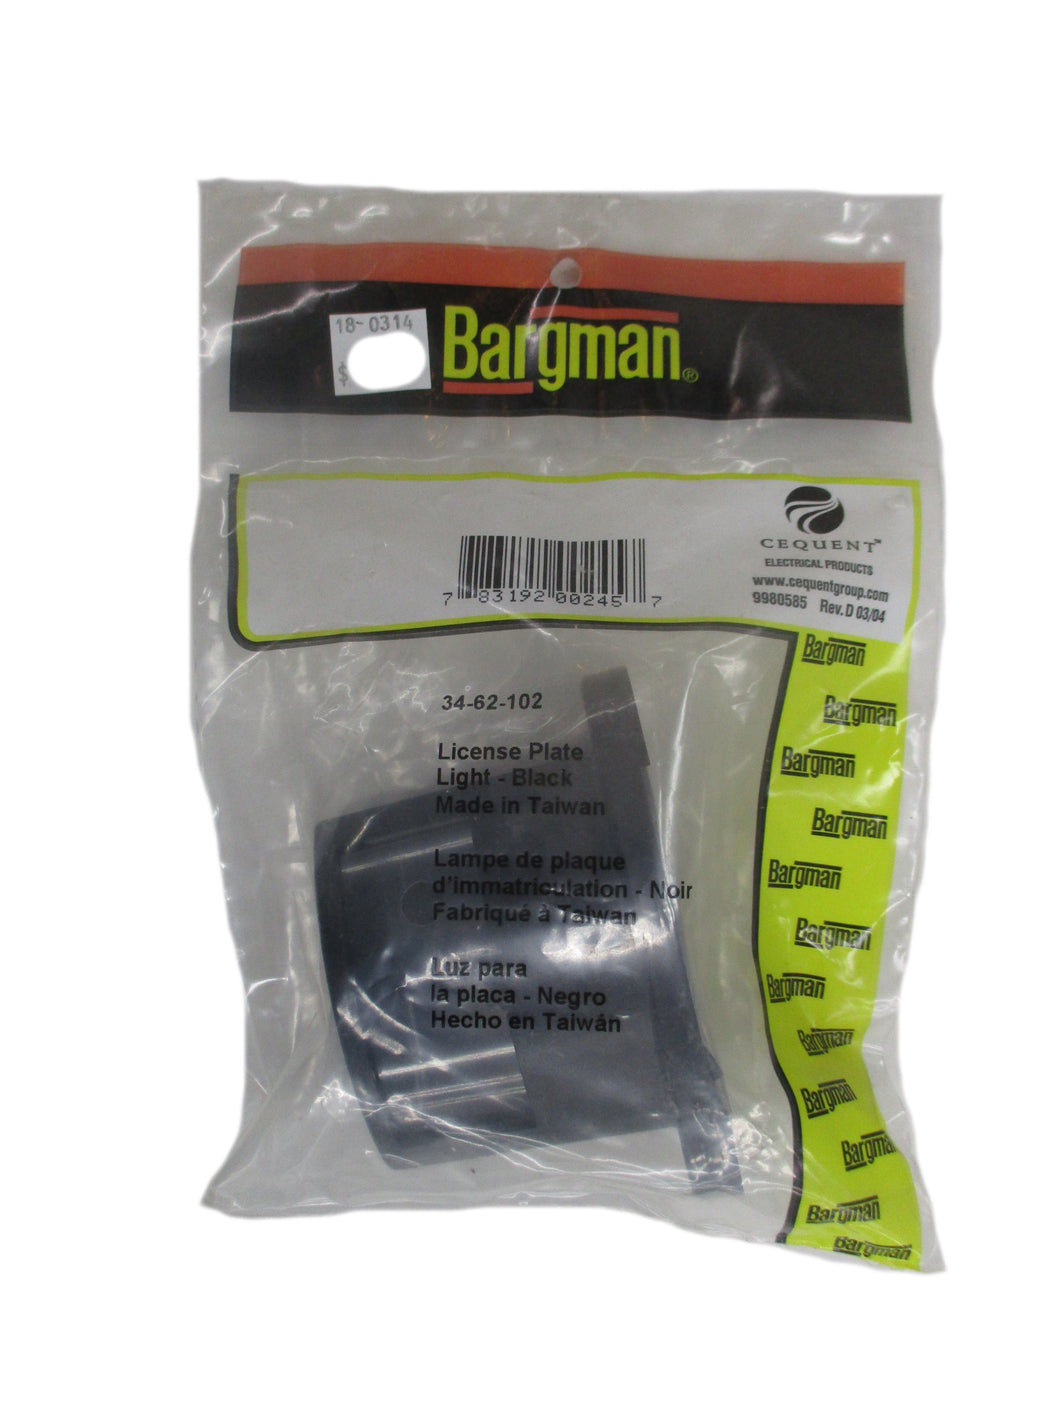 Bargman License Plate Light, Black Housing 18-0314